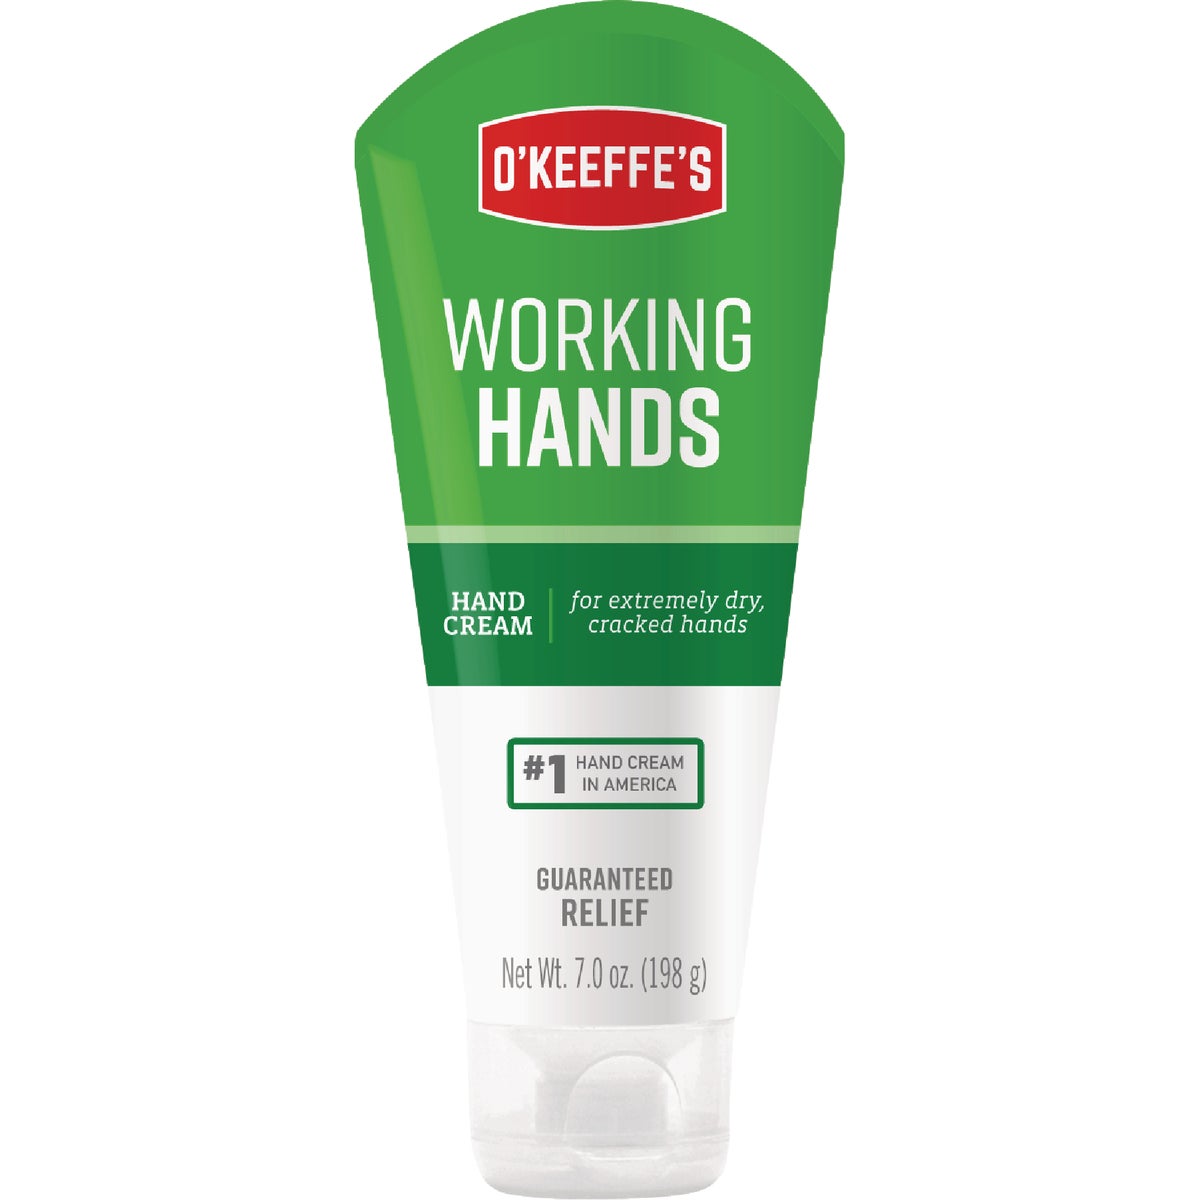 O'Keeffe's Working Hands 7 Oz. Hand Cream Tube